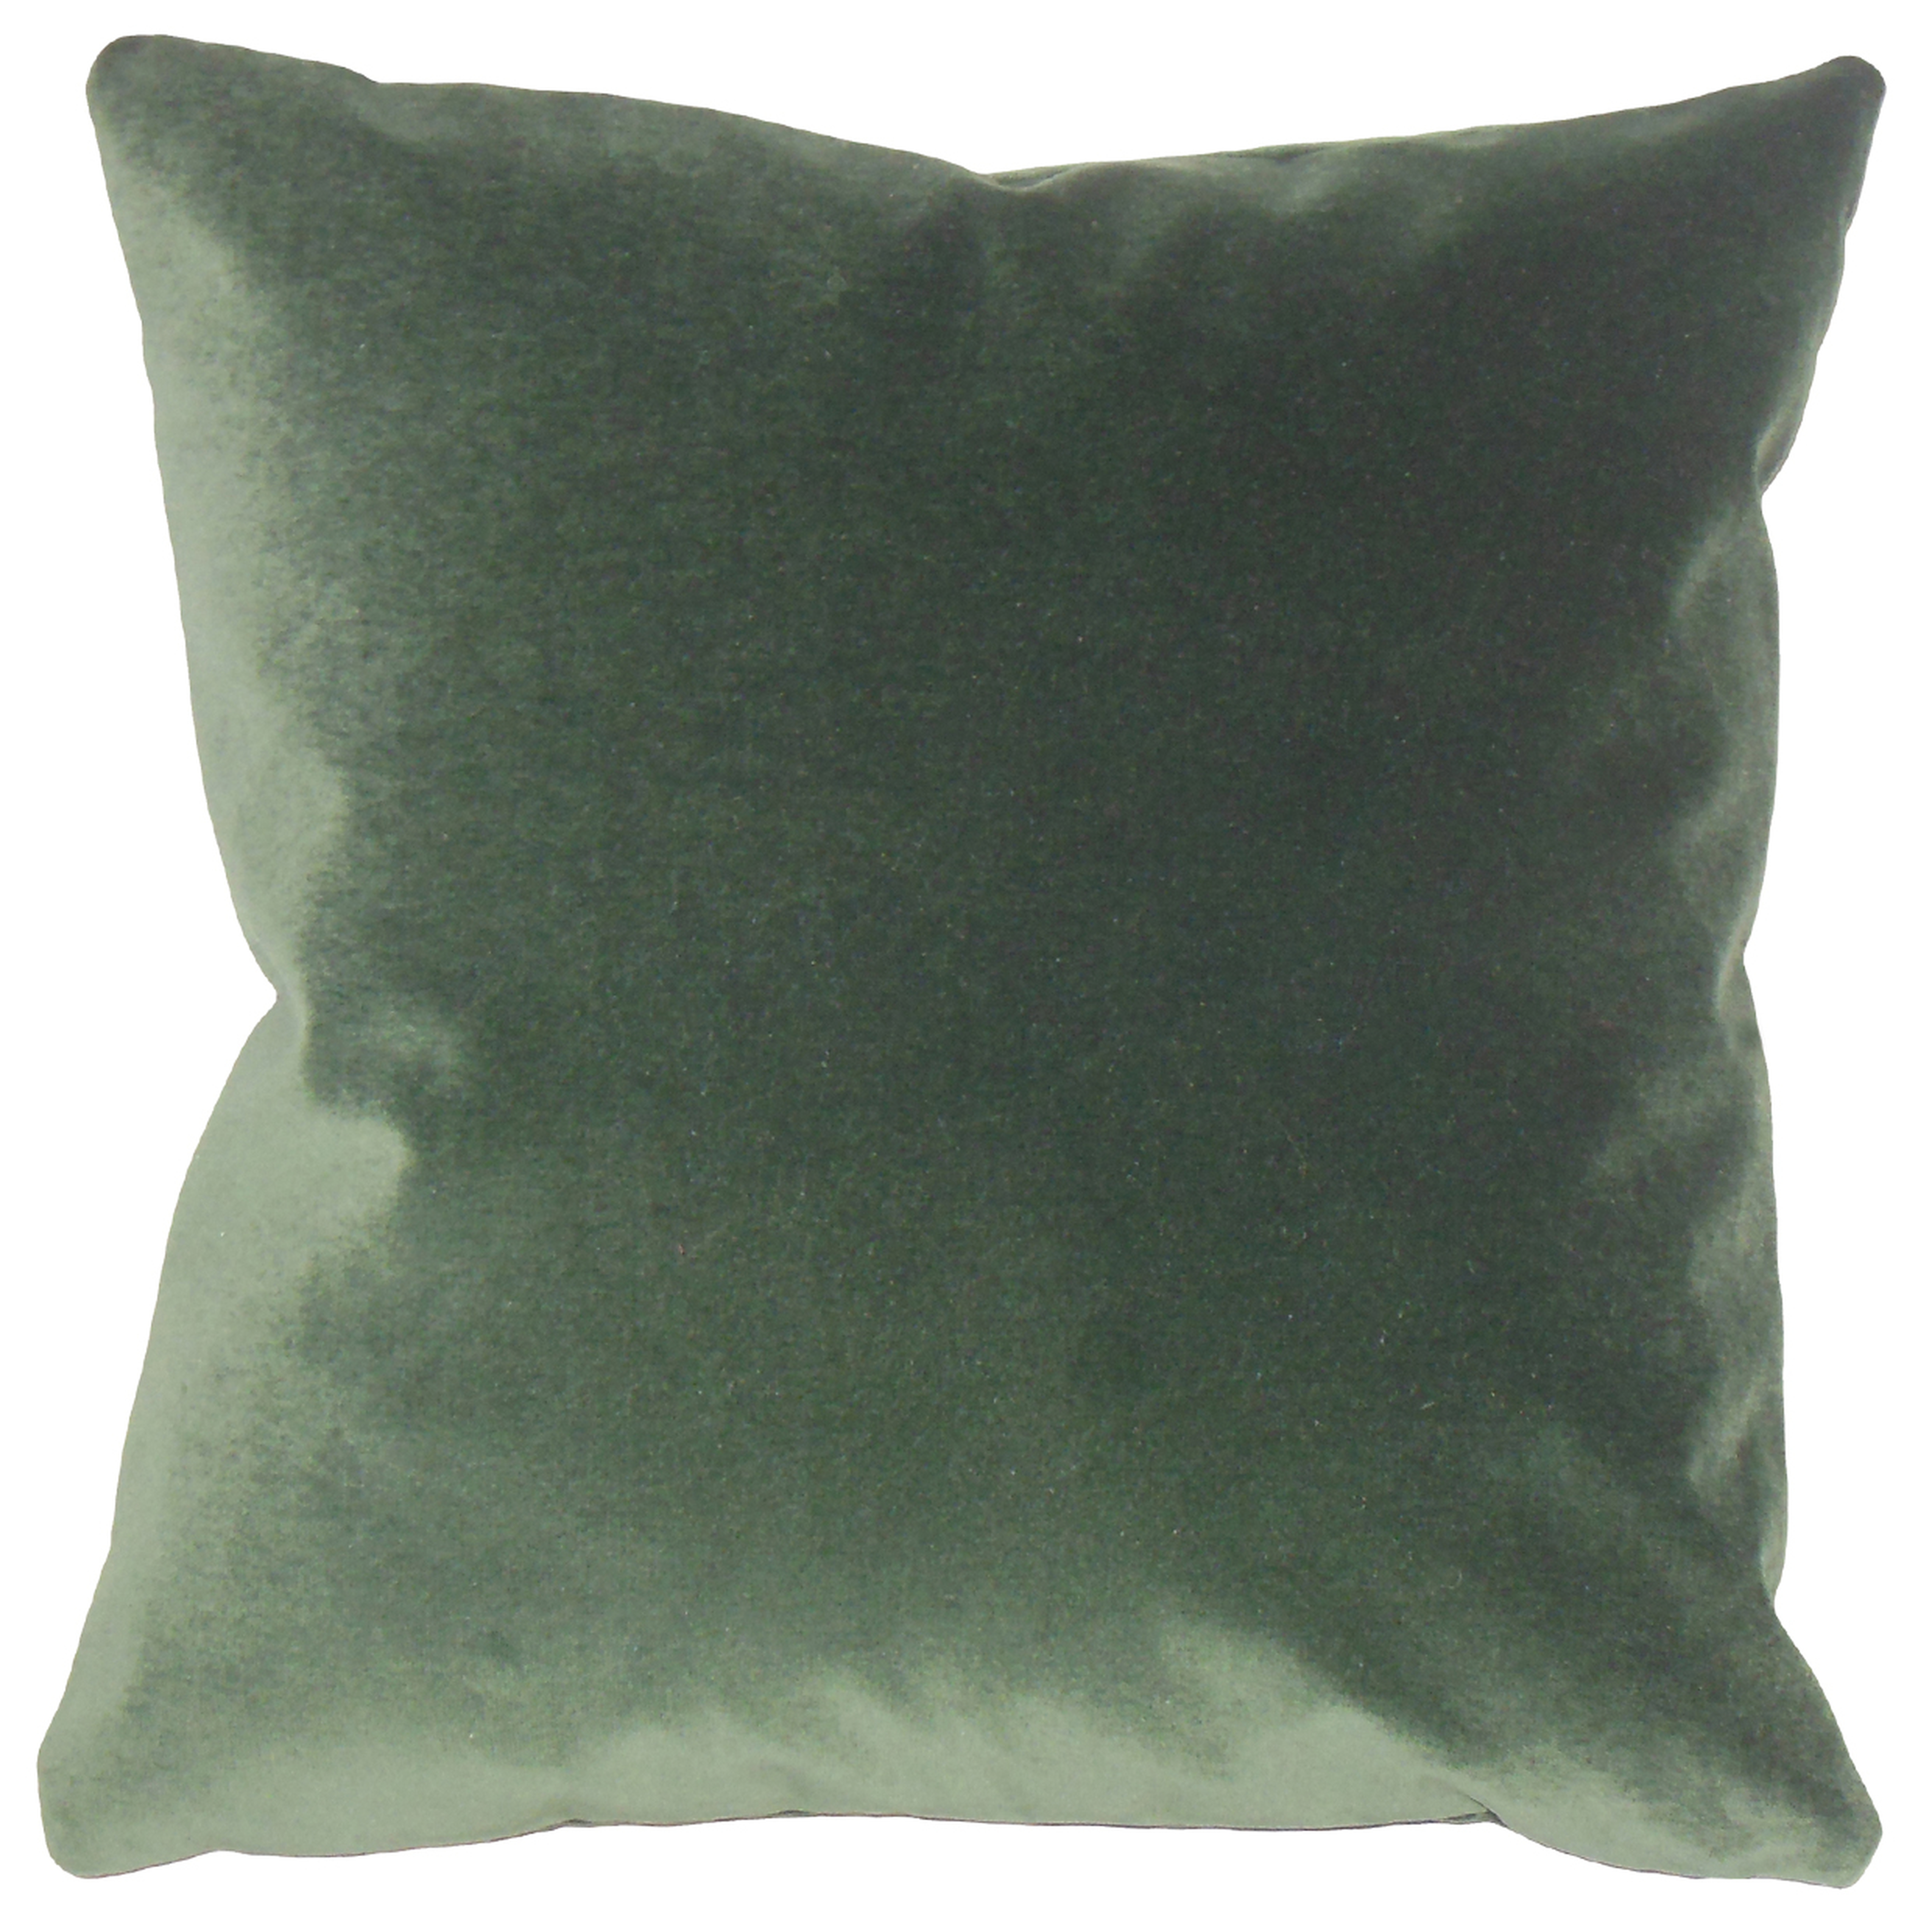 Vert Pillow, 20" x 20" w/ poly insert - Studio Marcette